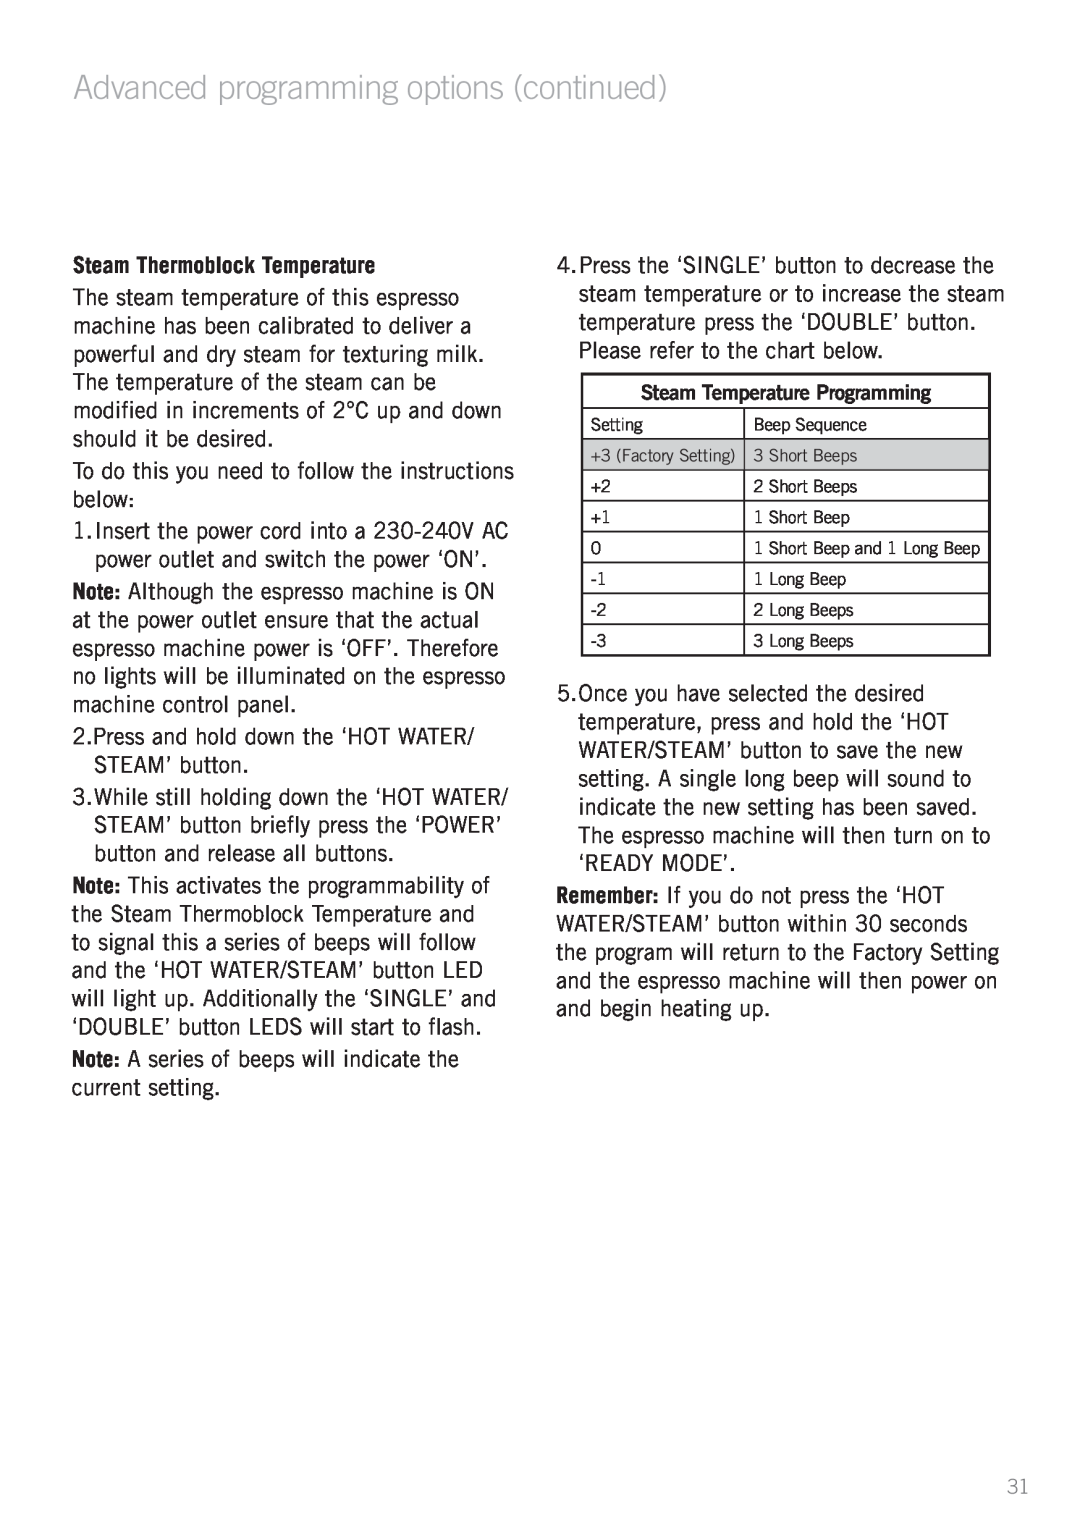 Sunbeam EM6200 manual Advanced programming options continued, Steam Thermoblock Temperature 